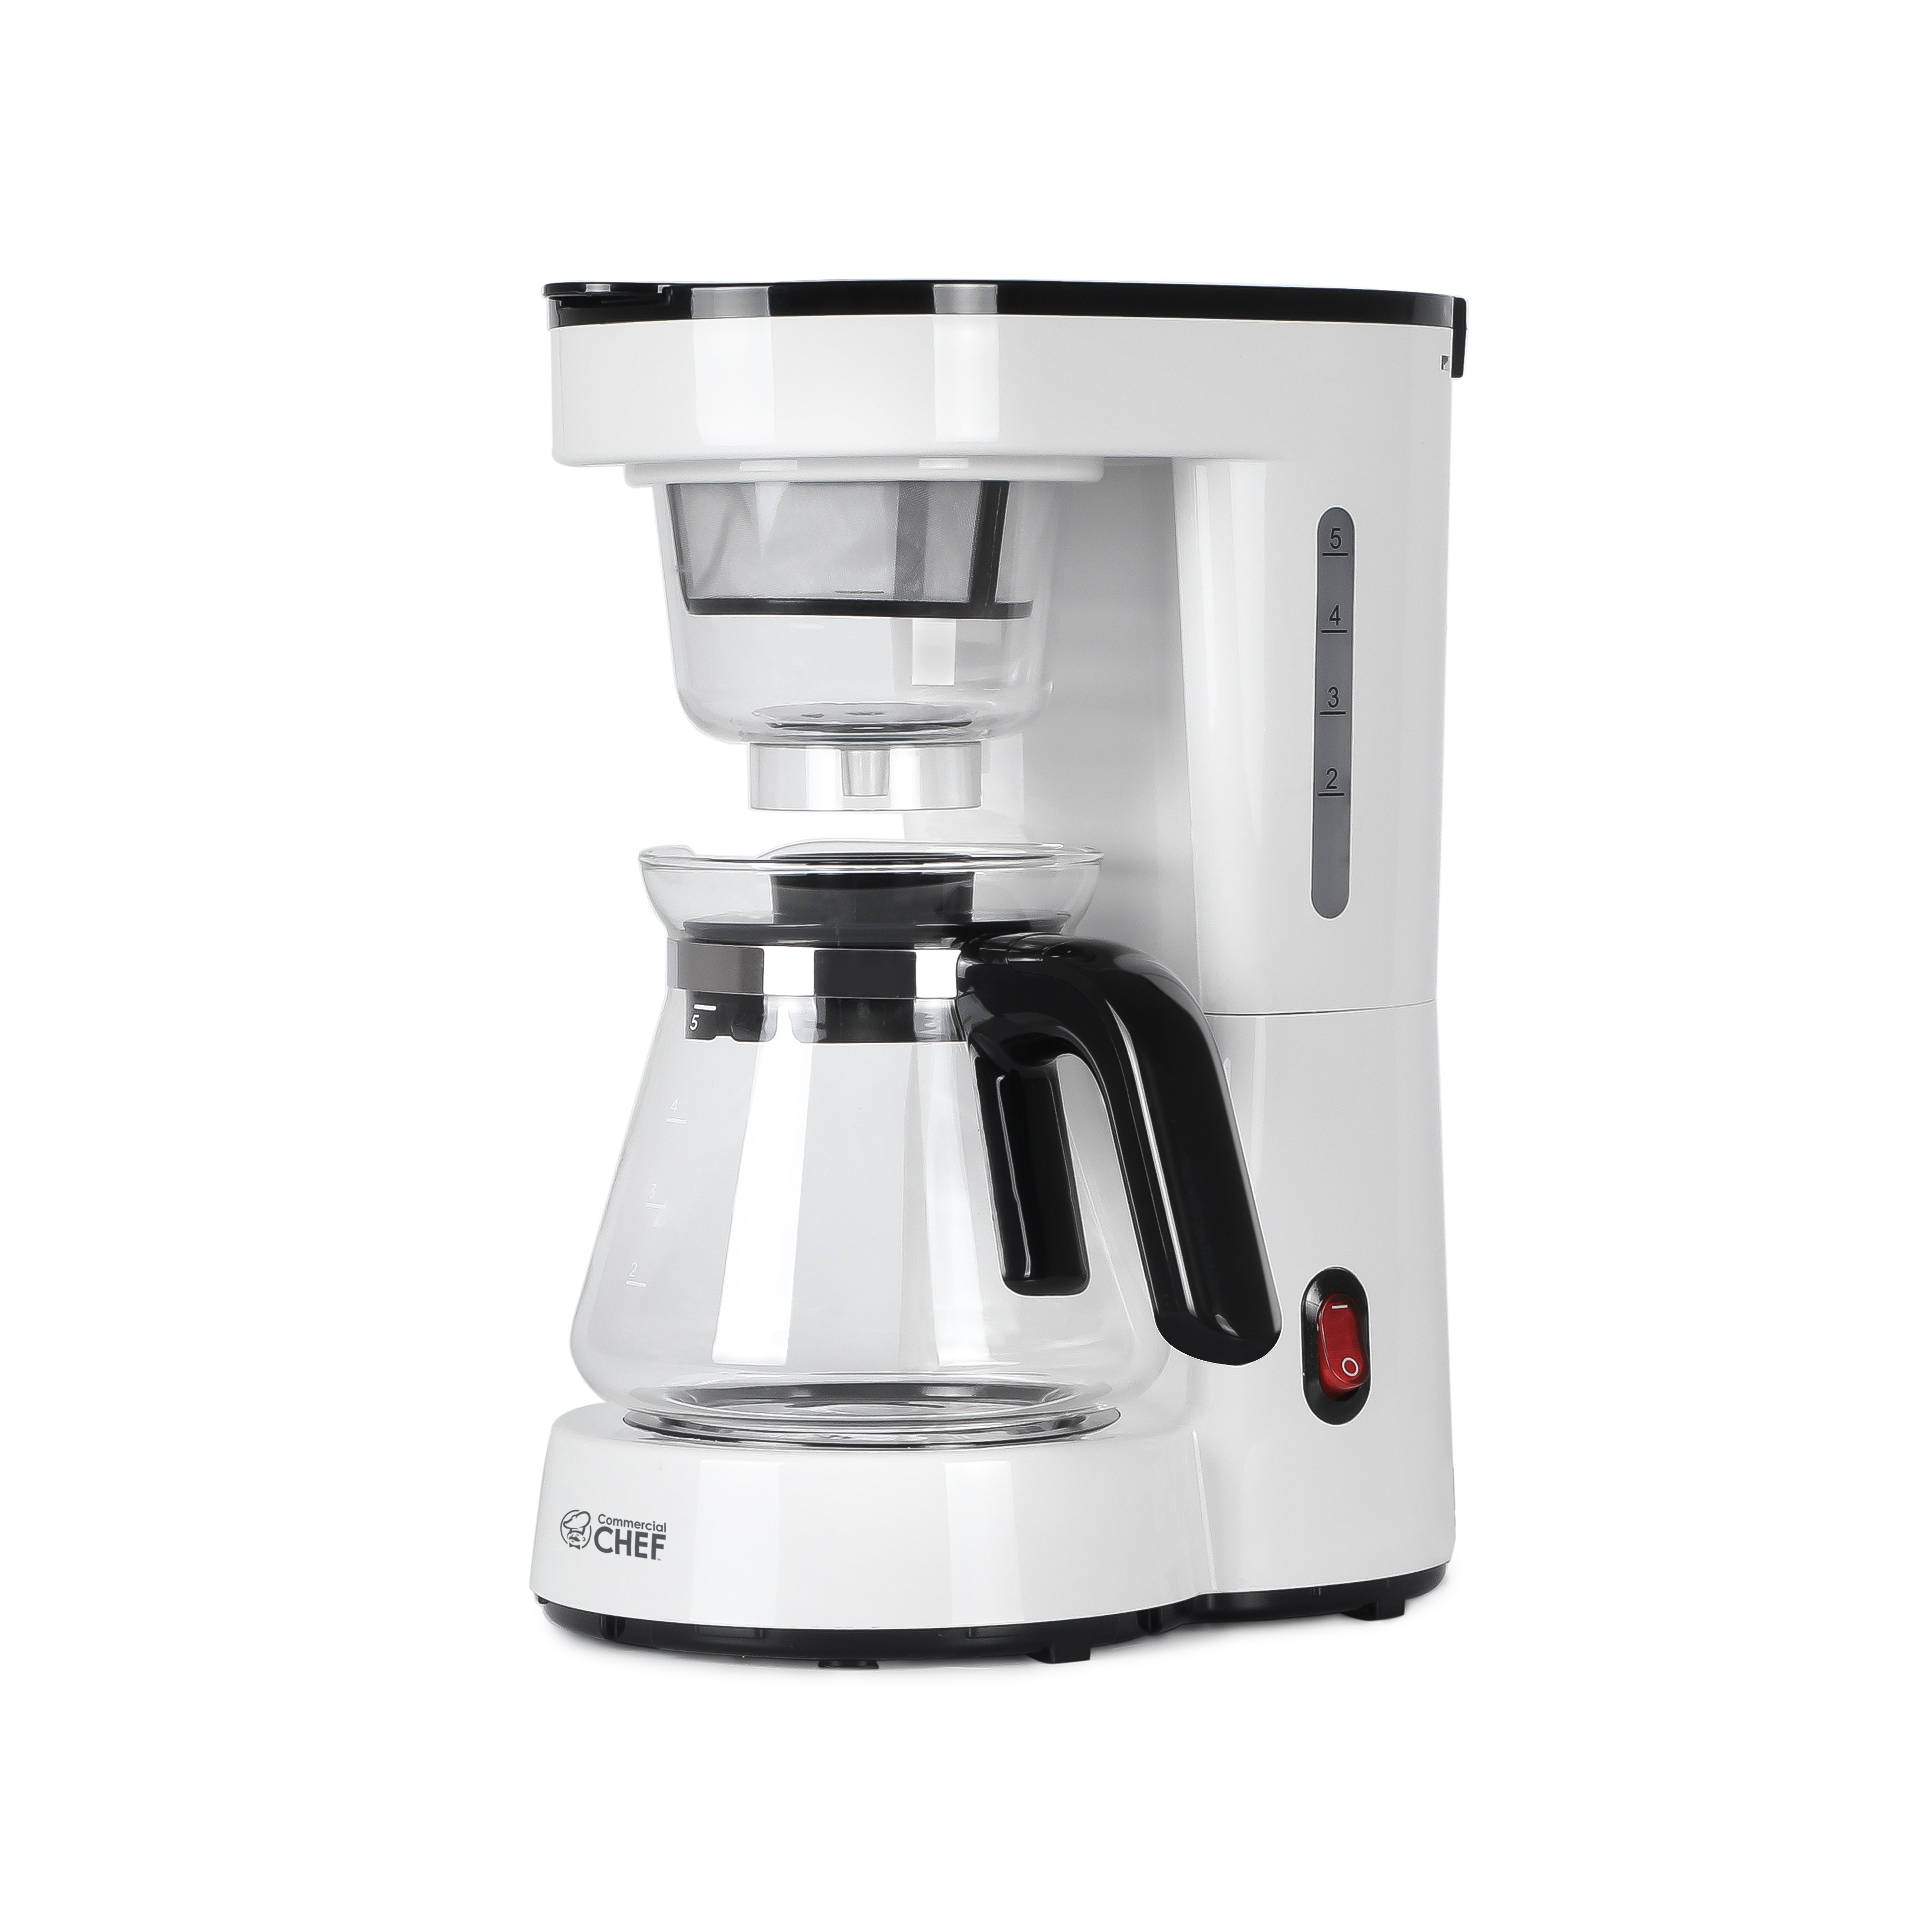 Brentwood TS-222BK 12-Cup Digital Coffee Maker, Black - Brentwood Appliances